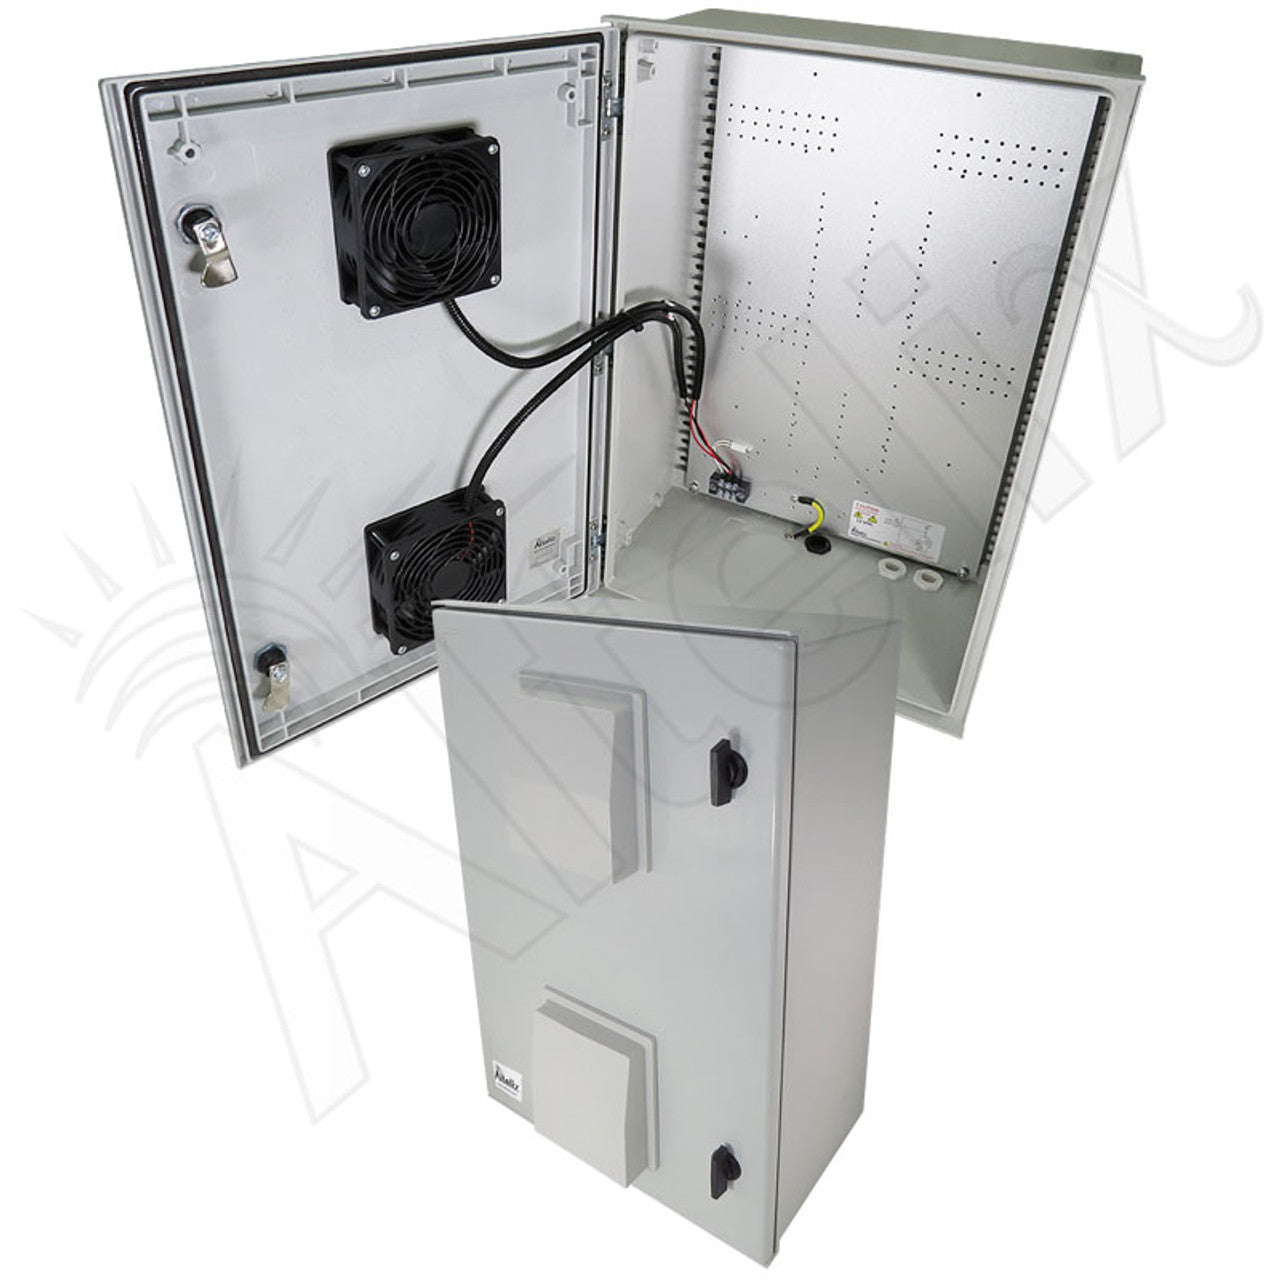 Altelix Vented Fiberglass Weatherproof NEMA Enclosure with 12 VDC Cooling Fan-5